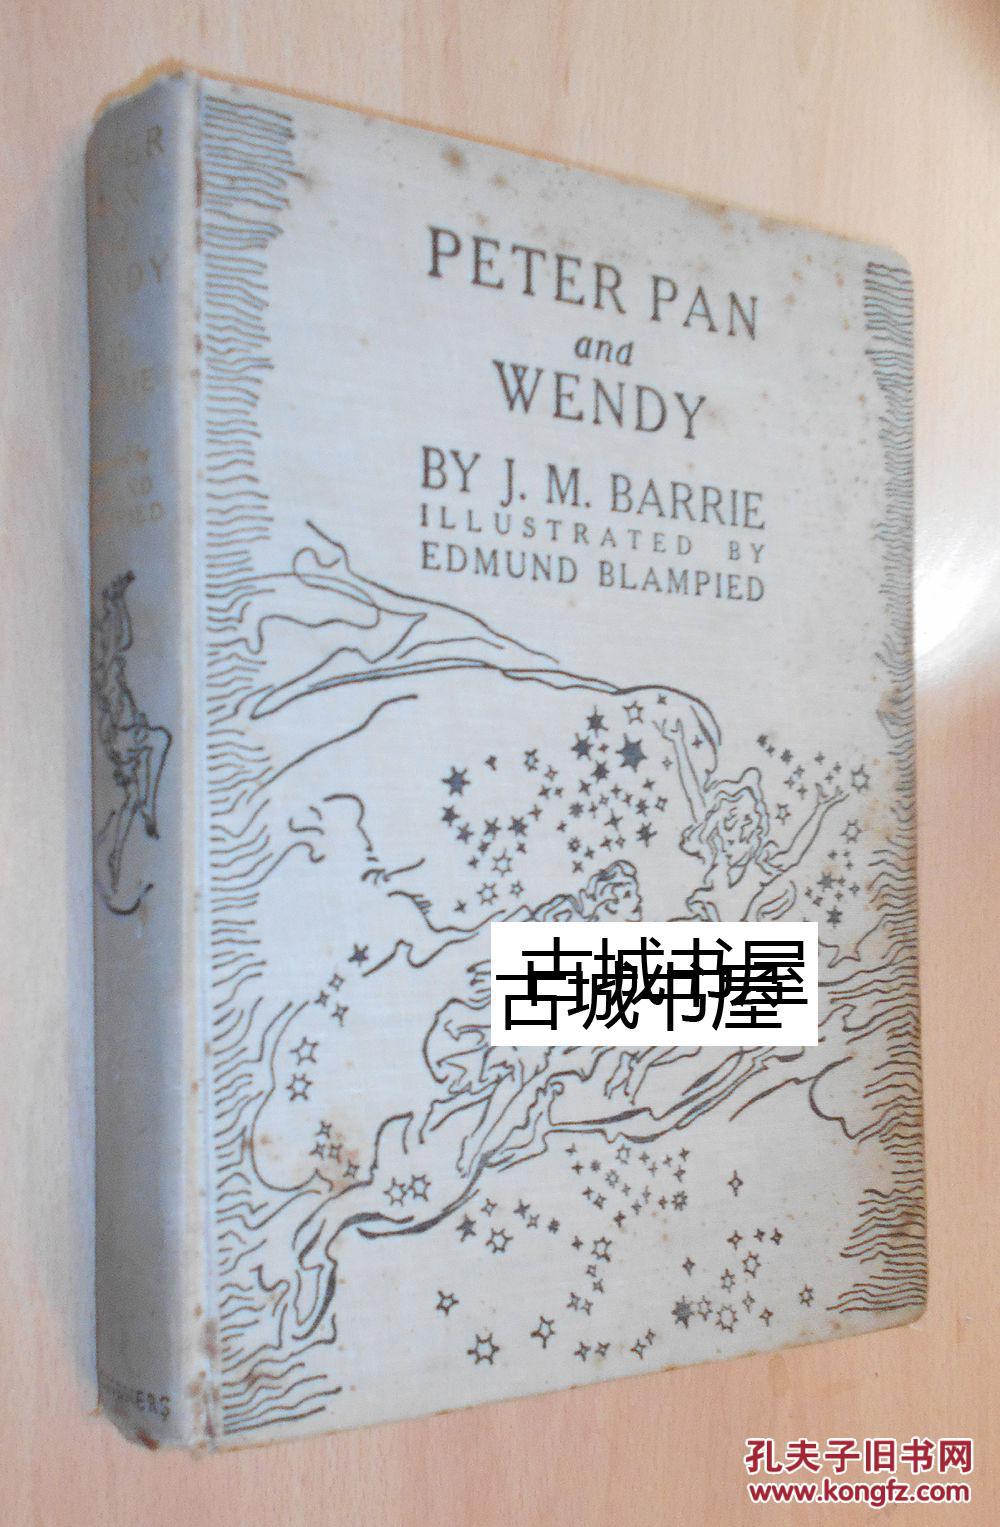 J·M·巴里著《彼得潘和温迪  》12幅 Blampied.l彩色版画与17幅黑白插图，1940年纽约出版，精装